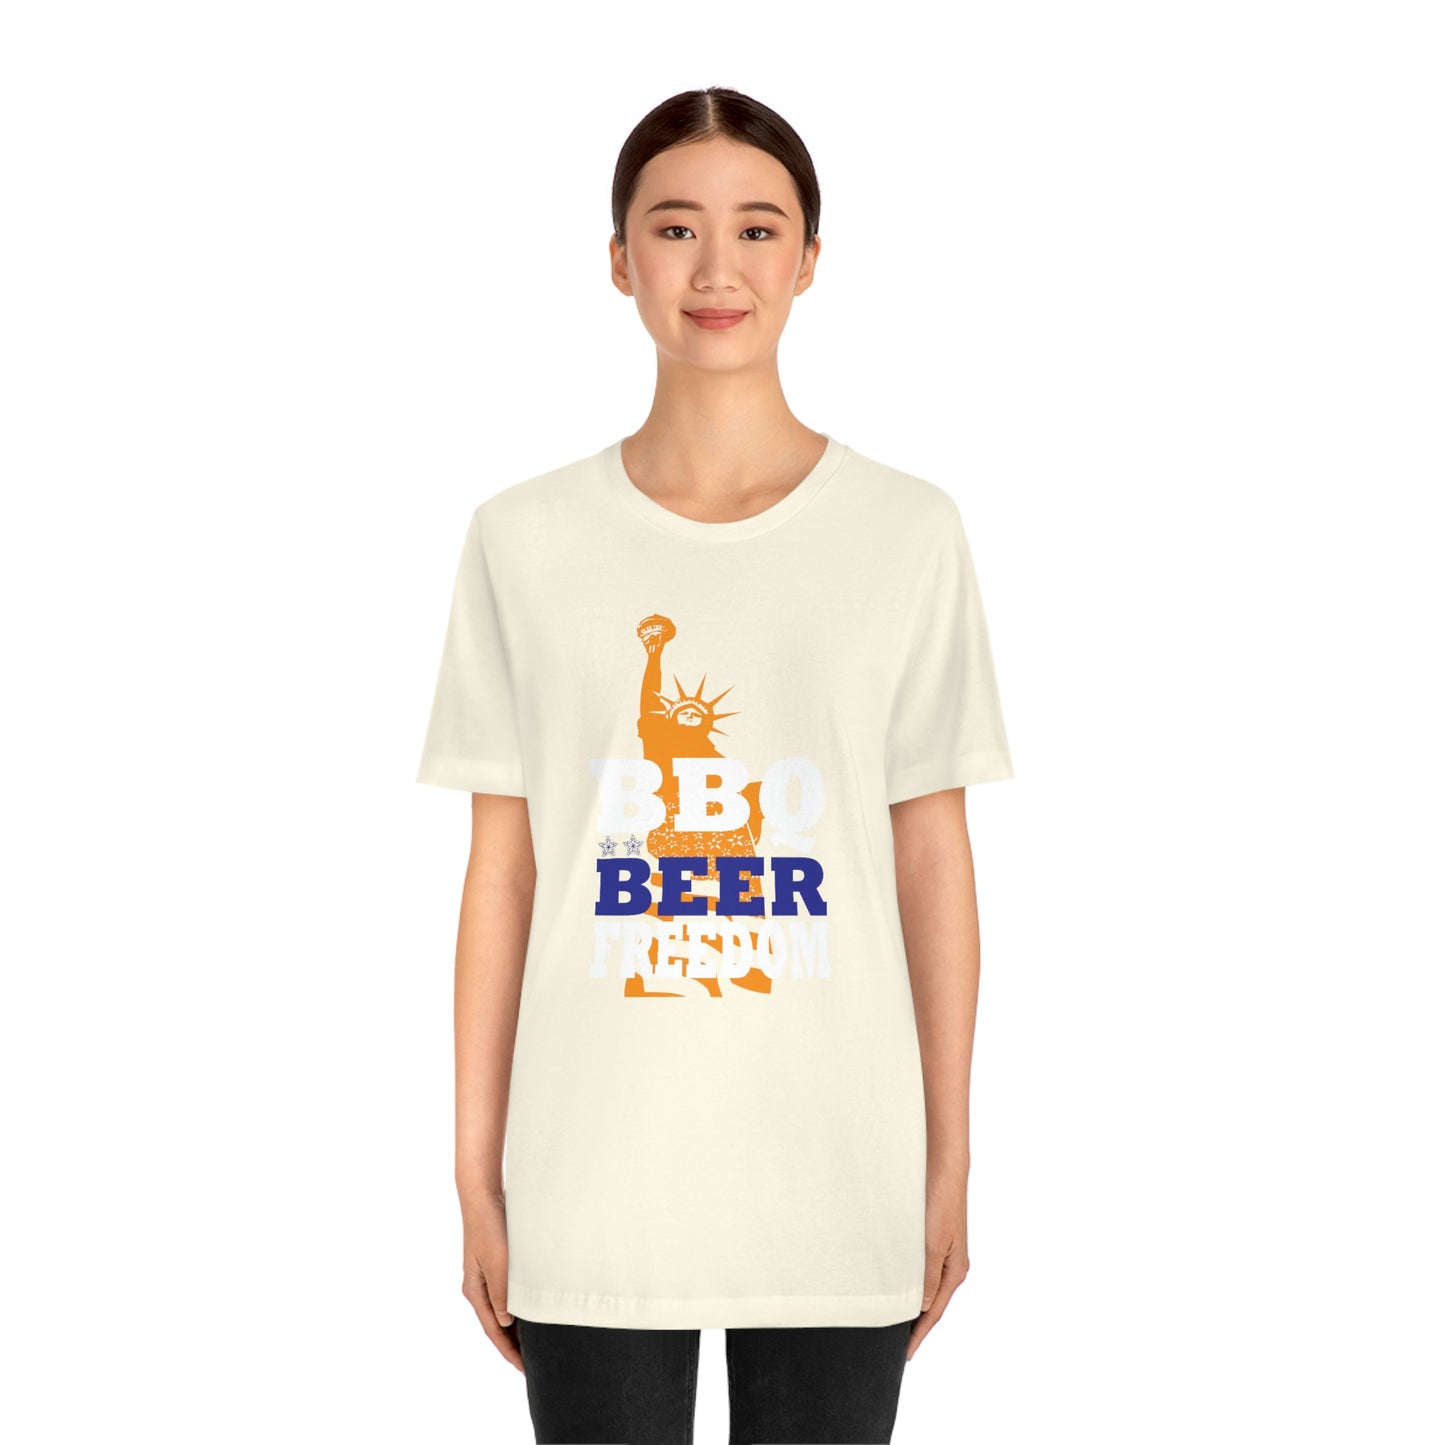 BBQ Beer Freedom Unisex Jersey Short Sleeve Tee